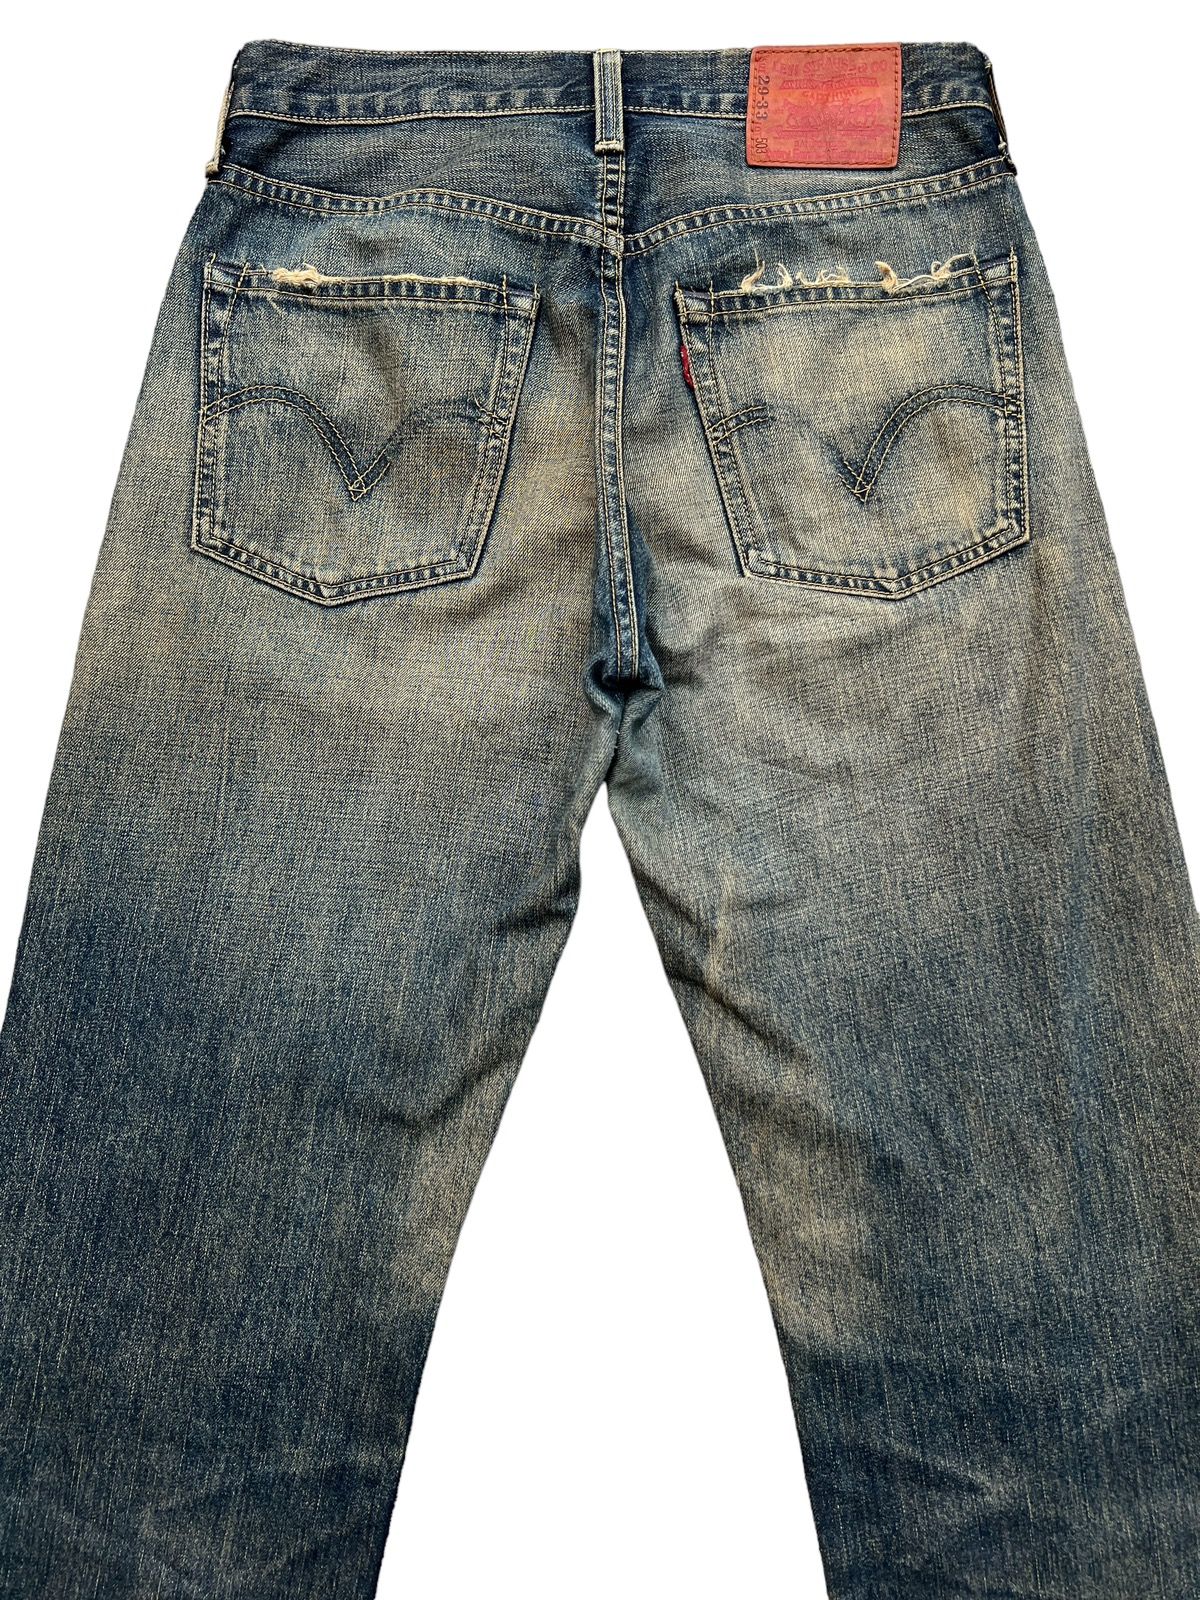 Vintage Levi’s 503 Distressed Rusty Denim Jeans 30x32 - 5